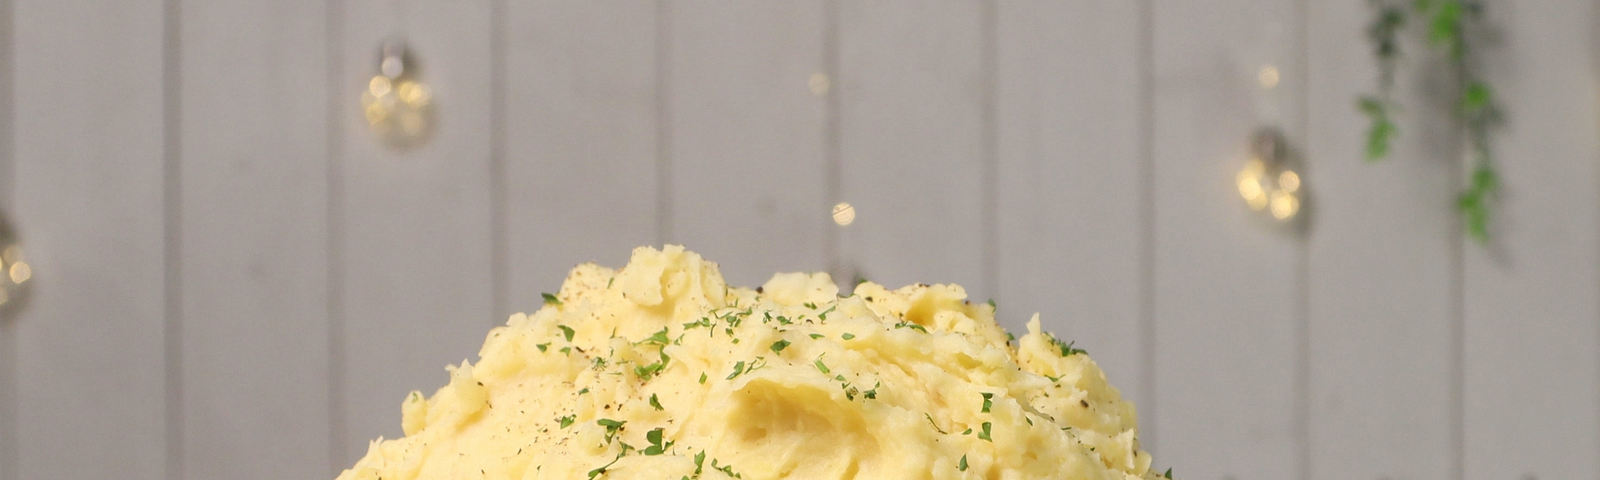 Vegan Mashed Potatoes Recipe in a bowl